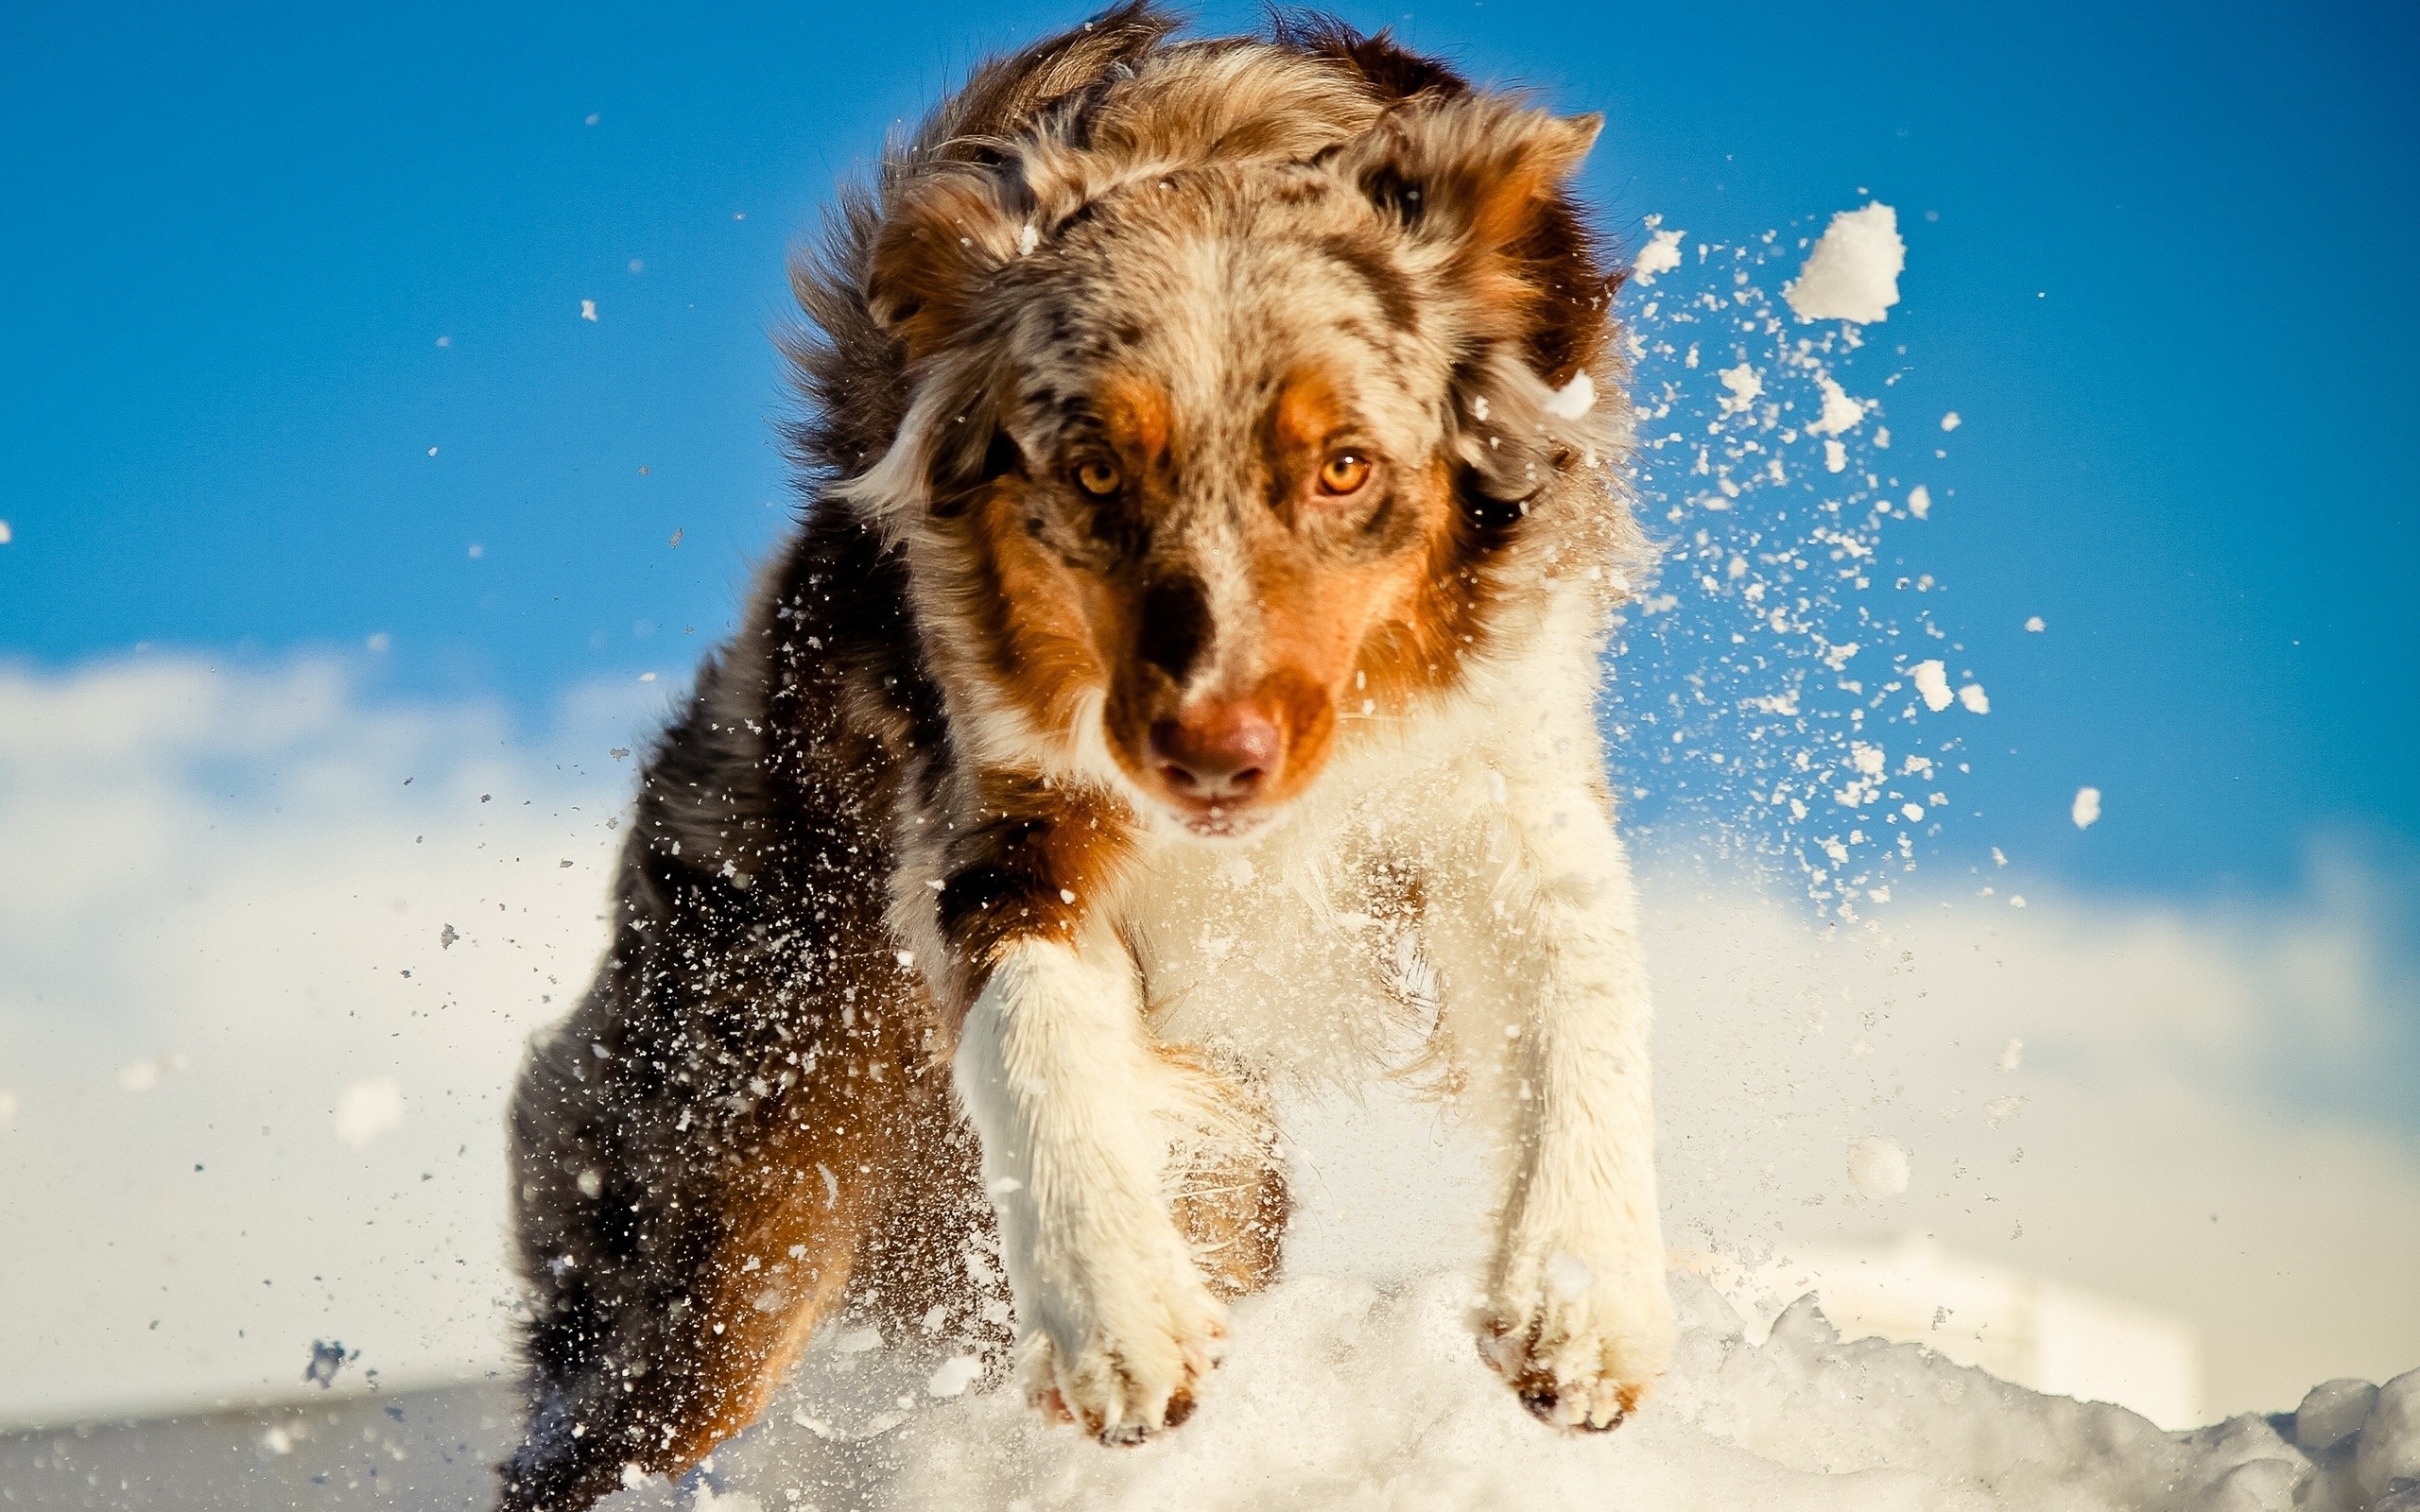 General 2560x1600 dog snow animals outdoors winter mammals